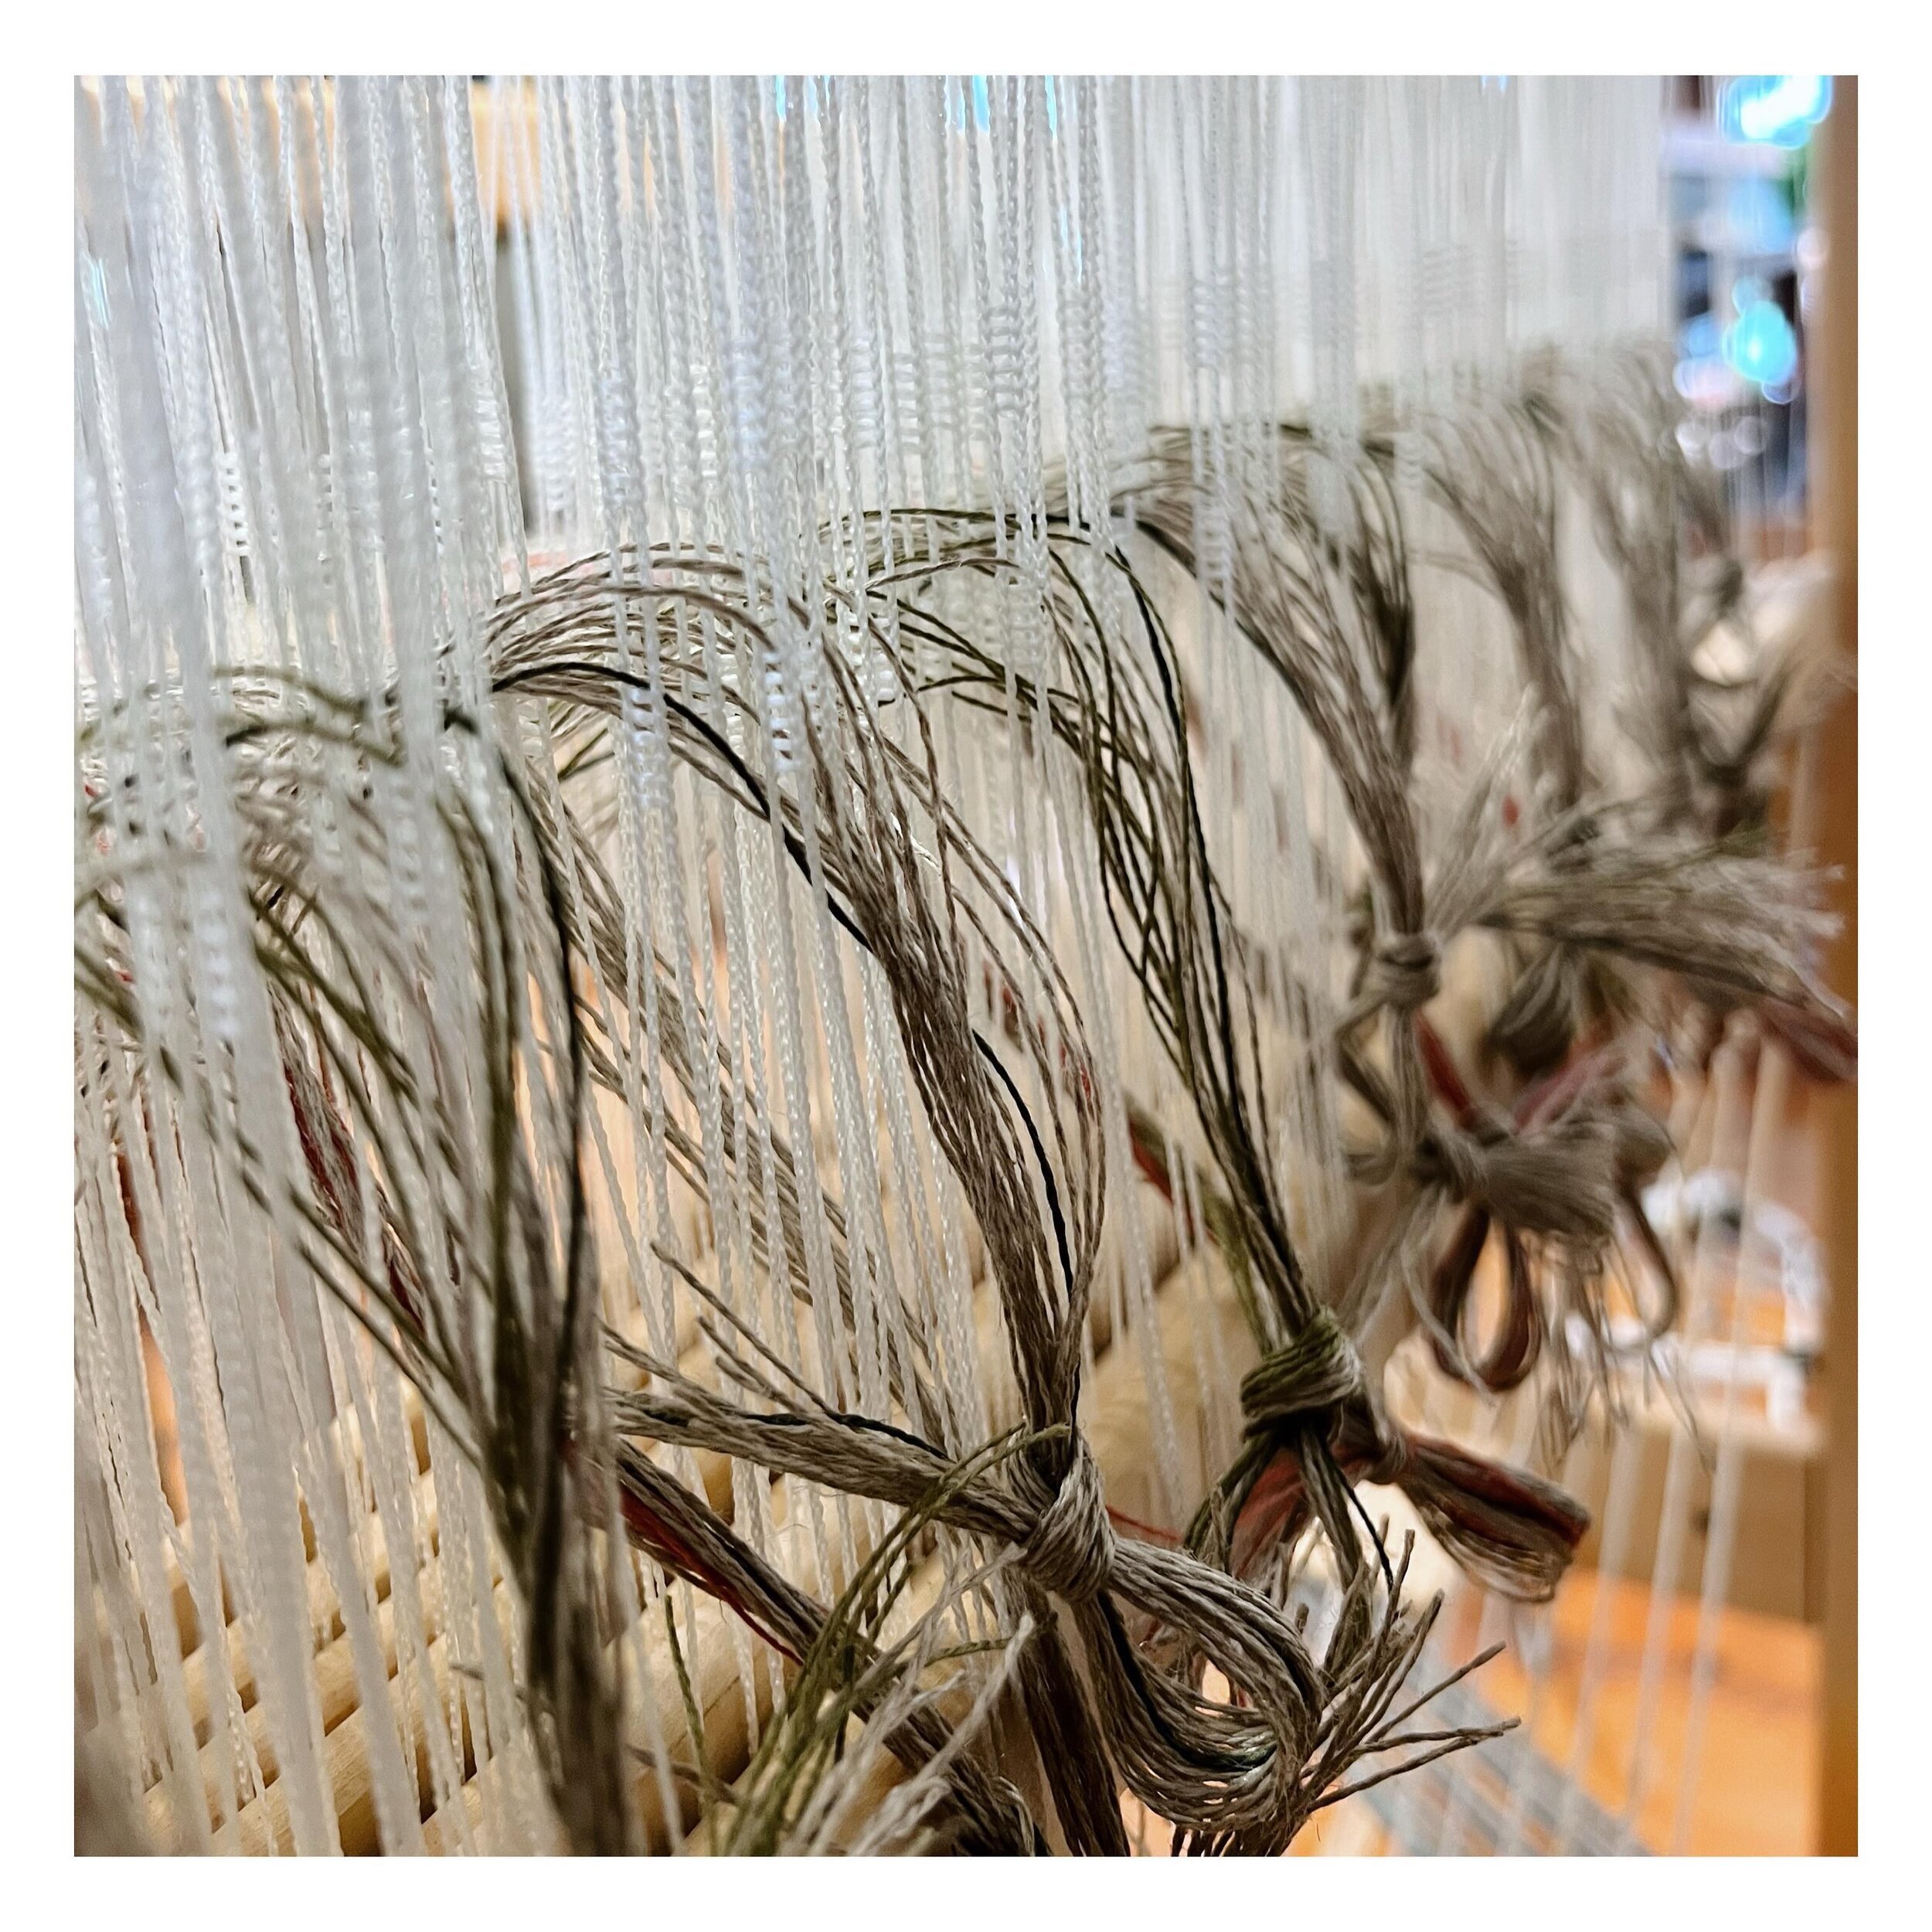 Threaded, sleyed, and ready to tie on 🙂🧵❤️
.
.
.
.
#sleythereed #threadtheheddles #weaving #weavingprocess #weaver #handwoven #handmade #finecraft #dresstheloom #linen #linenlove #naturalfibers #sustainablefiber #louetdavid #bockenslinen